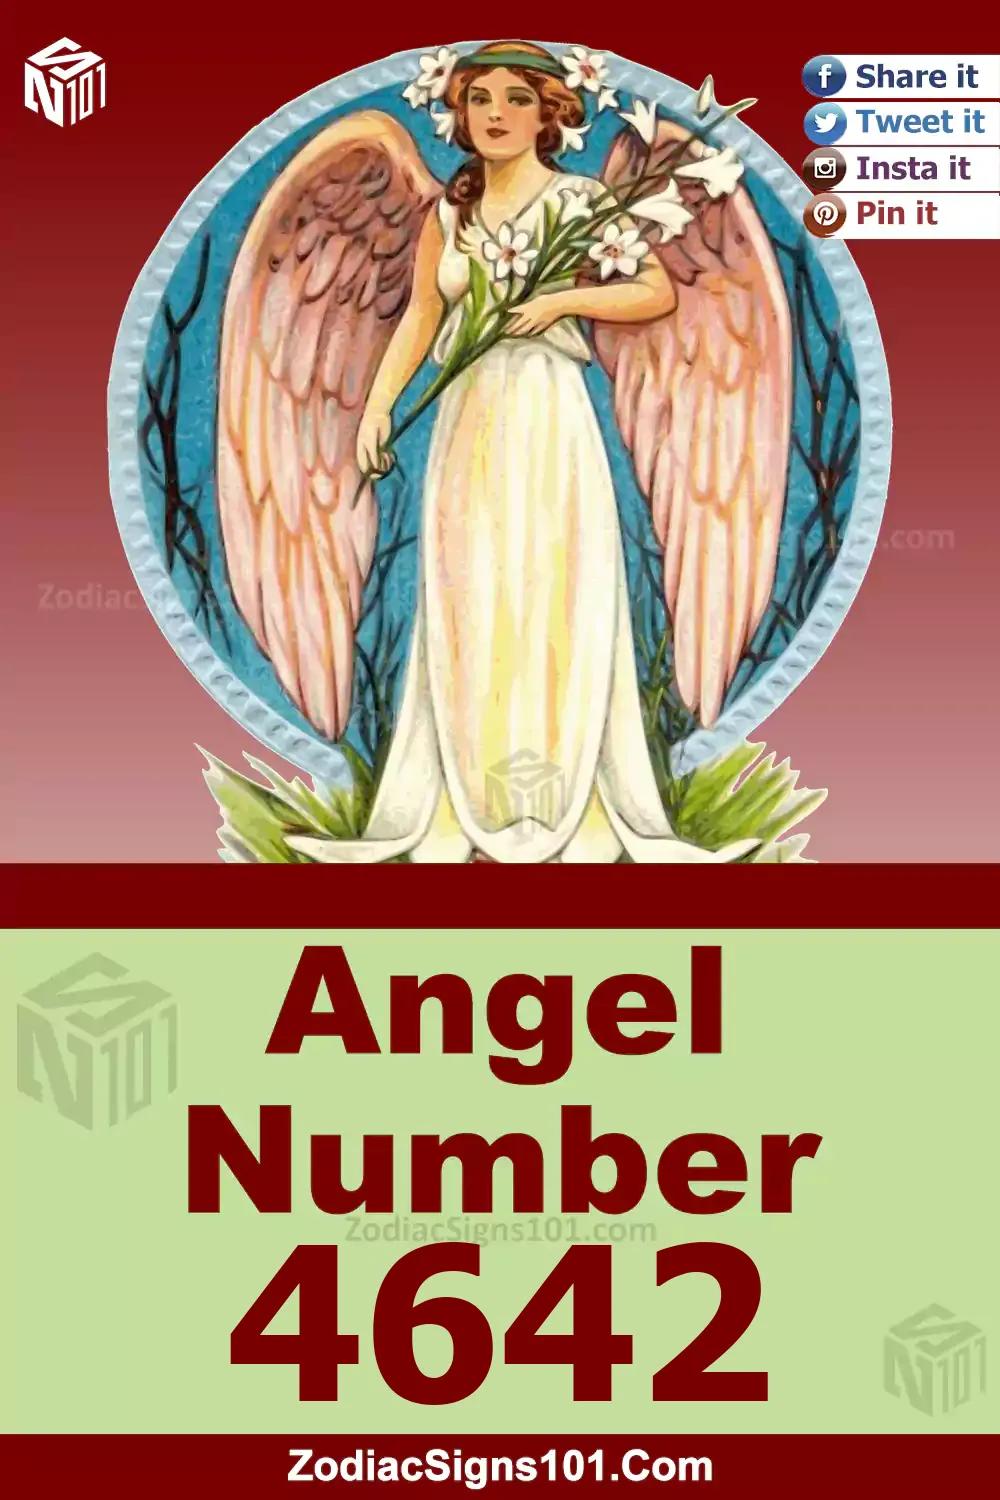 4642-Angel-Number-Meaning.jpg